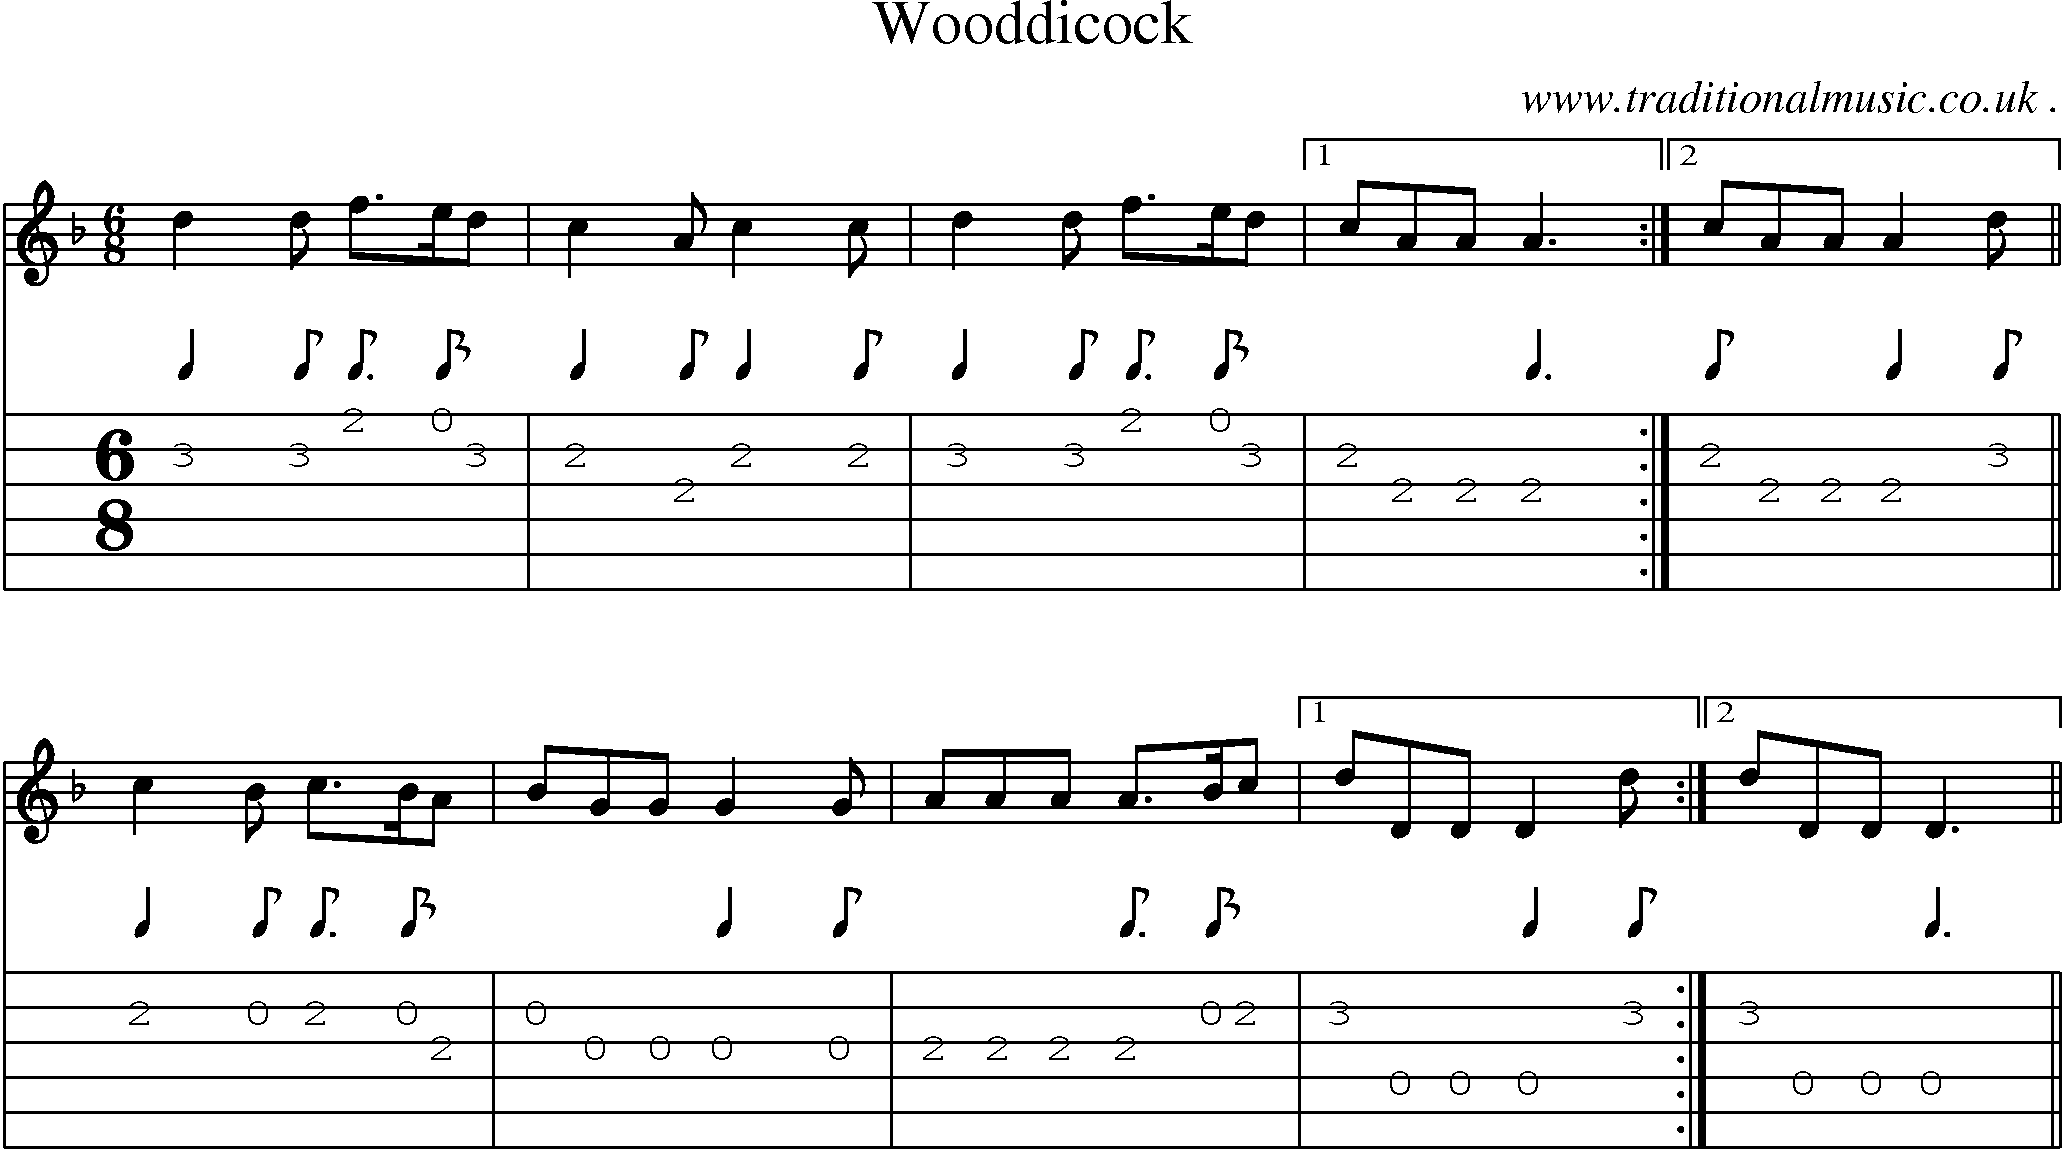 Sheet-Music and Guitar Tabs for Wooddicock